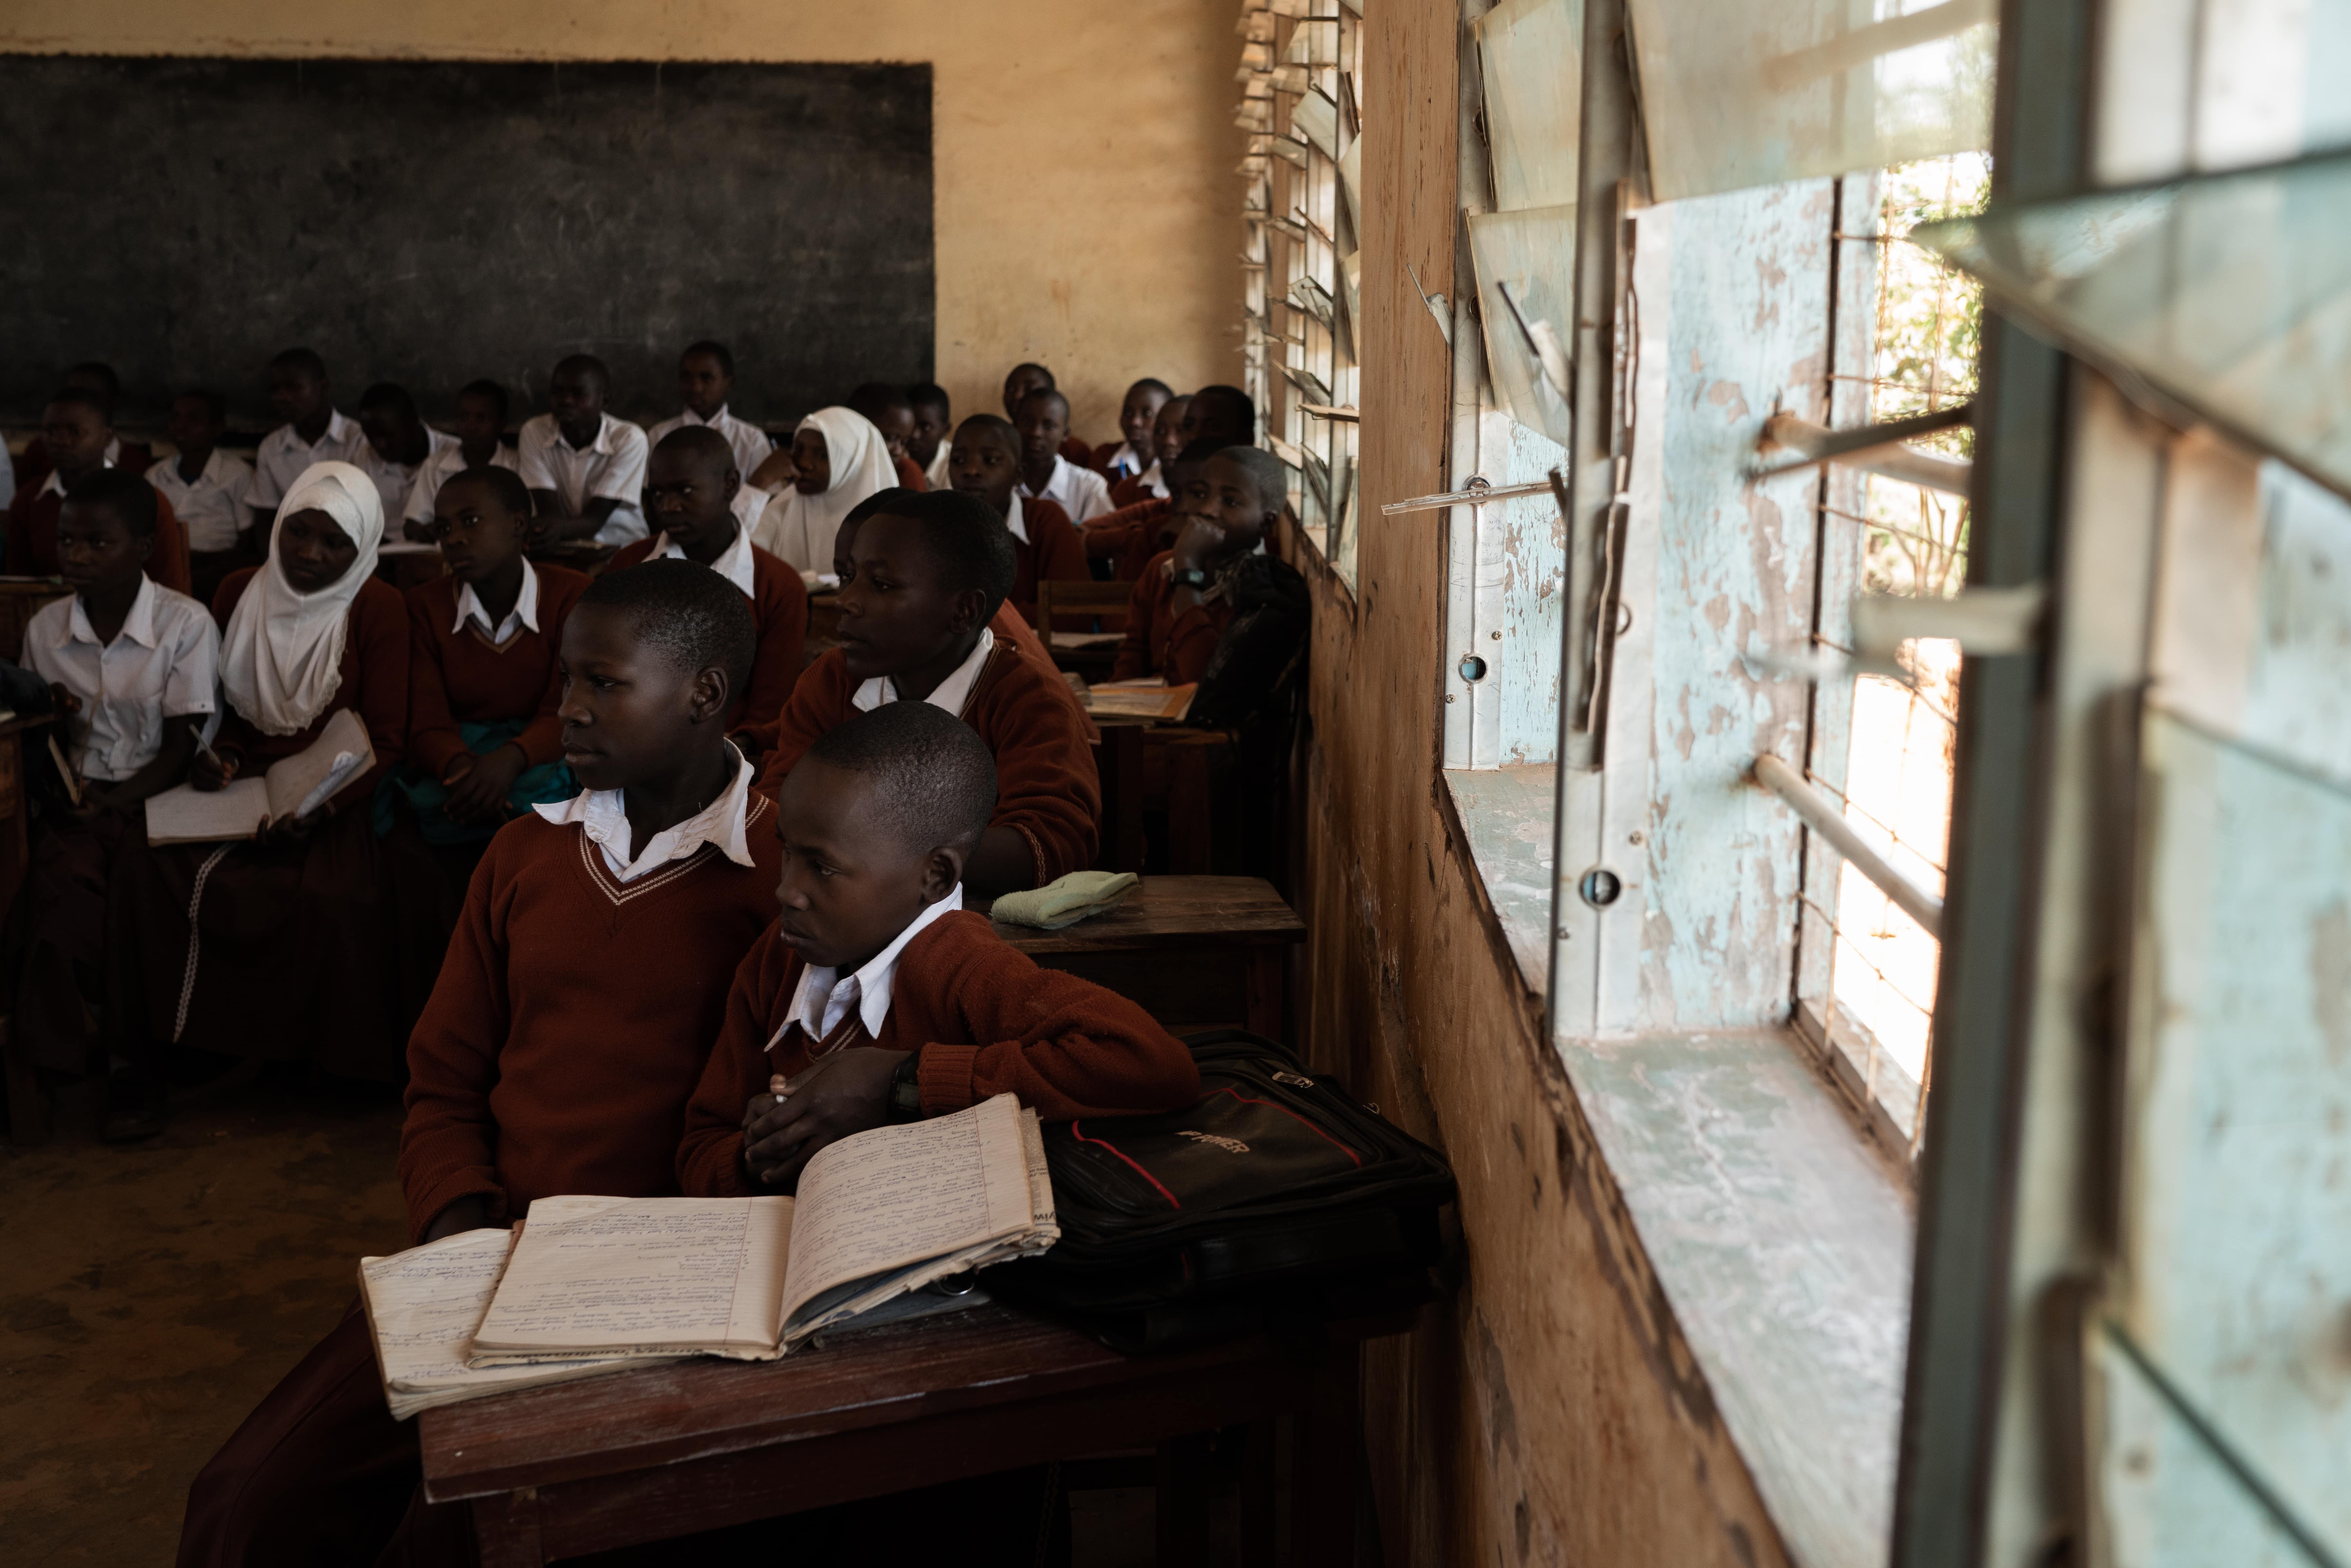 Amos William Sentabo 村校校长说：「学校需要更多资源，包括基建及老师。」村民正向政府跟进有关问题，希望村内的教育服务在短期内有所提升。